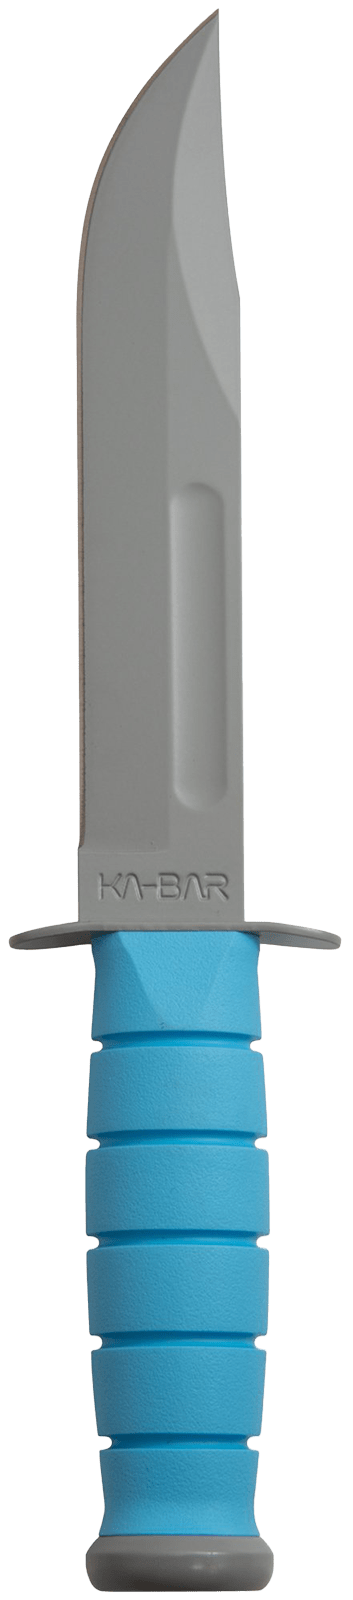 Ka-Bar Ussf Space-Bar Knife Blue Kraton G Handle, Gray Hard Sheath, Str Edge 1313SF - Knives